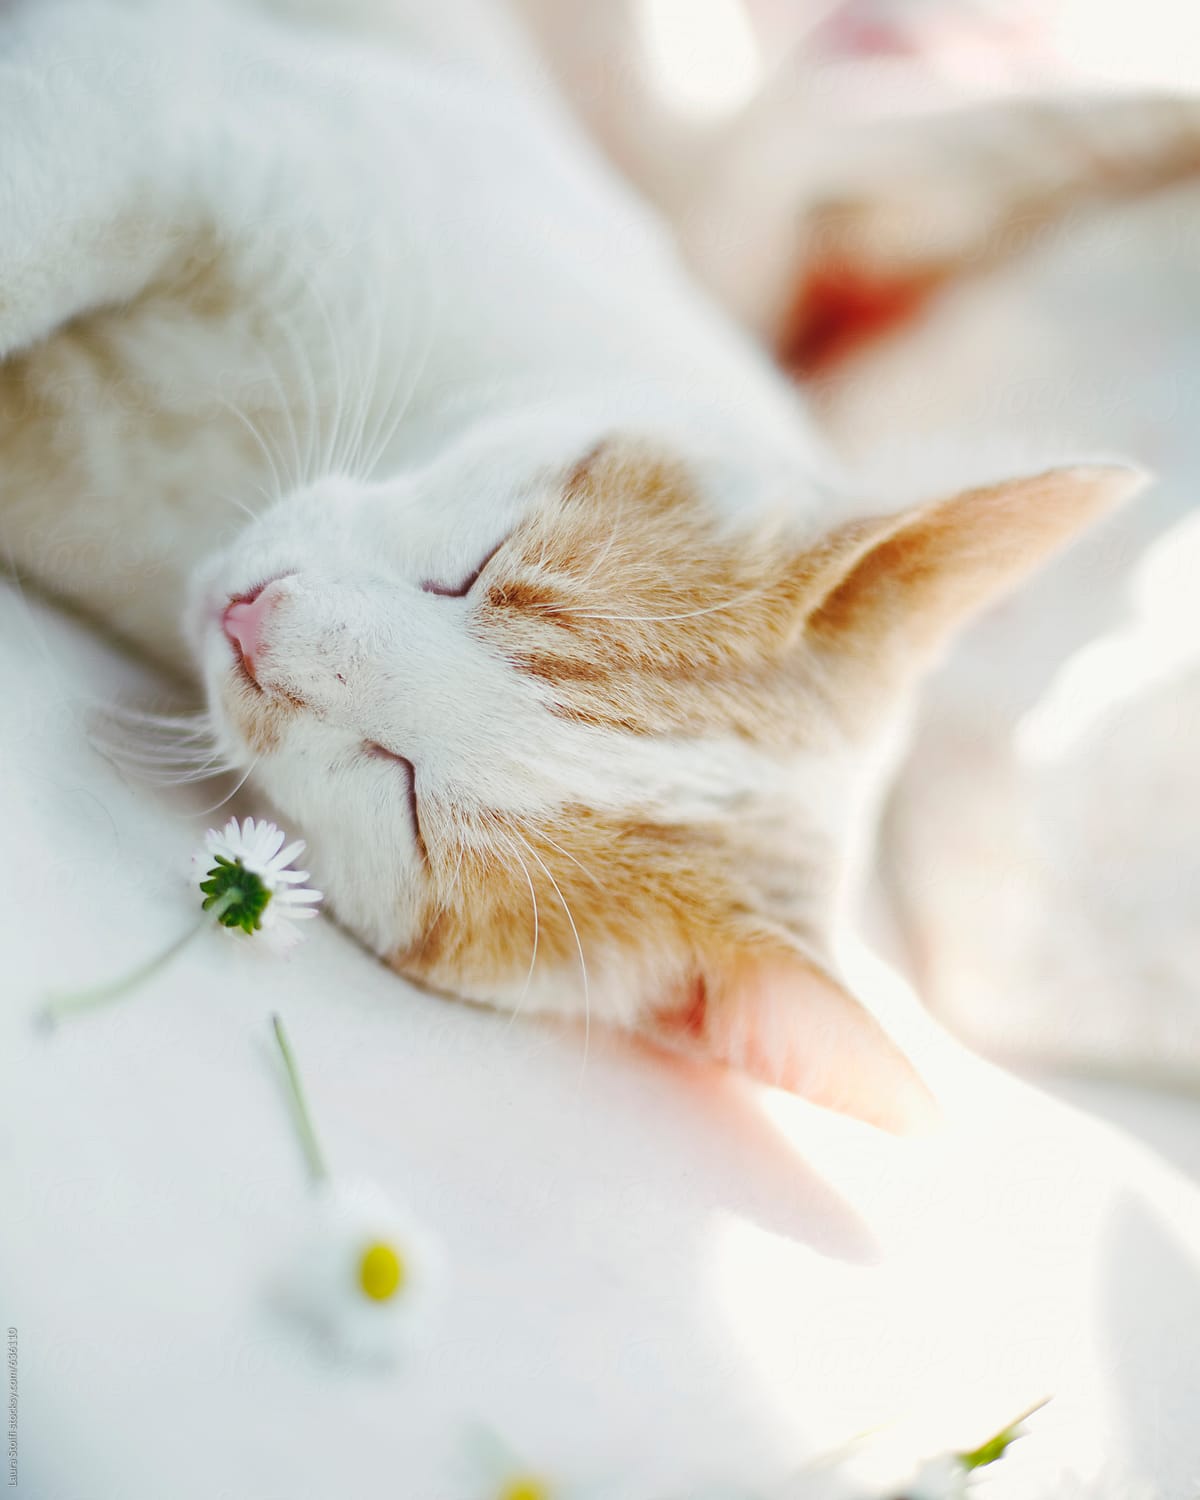 Sleeping beauty: cat asleep close to daisies on blanket